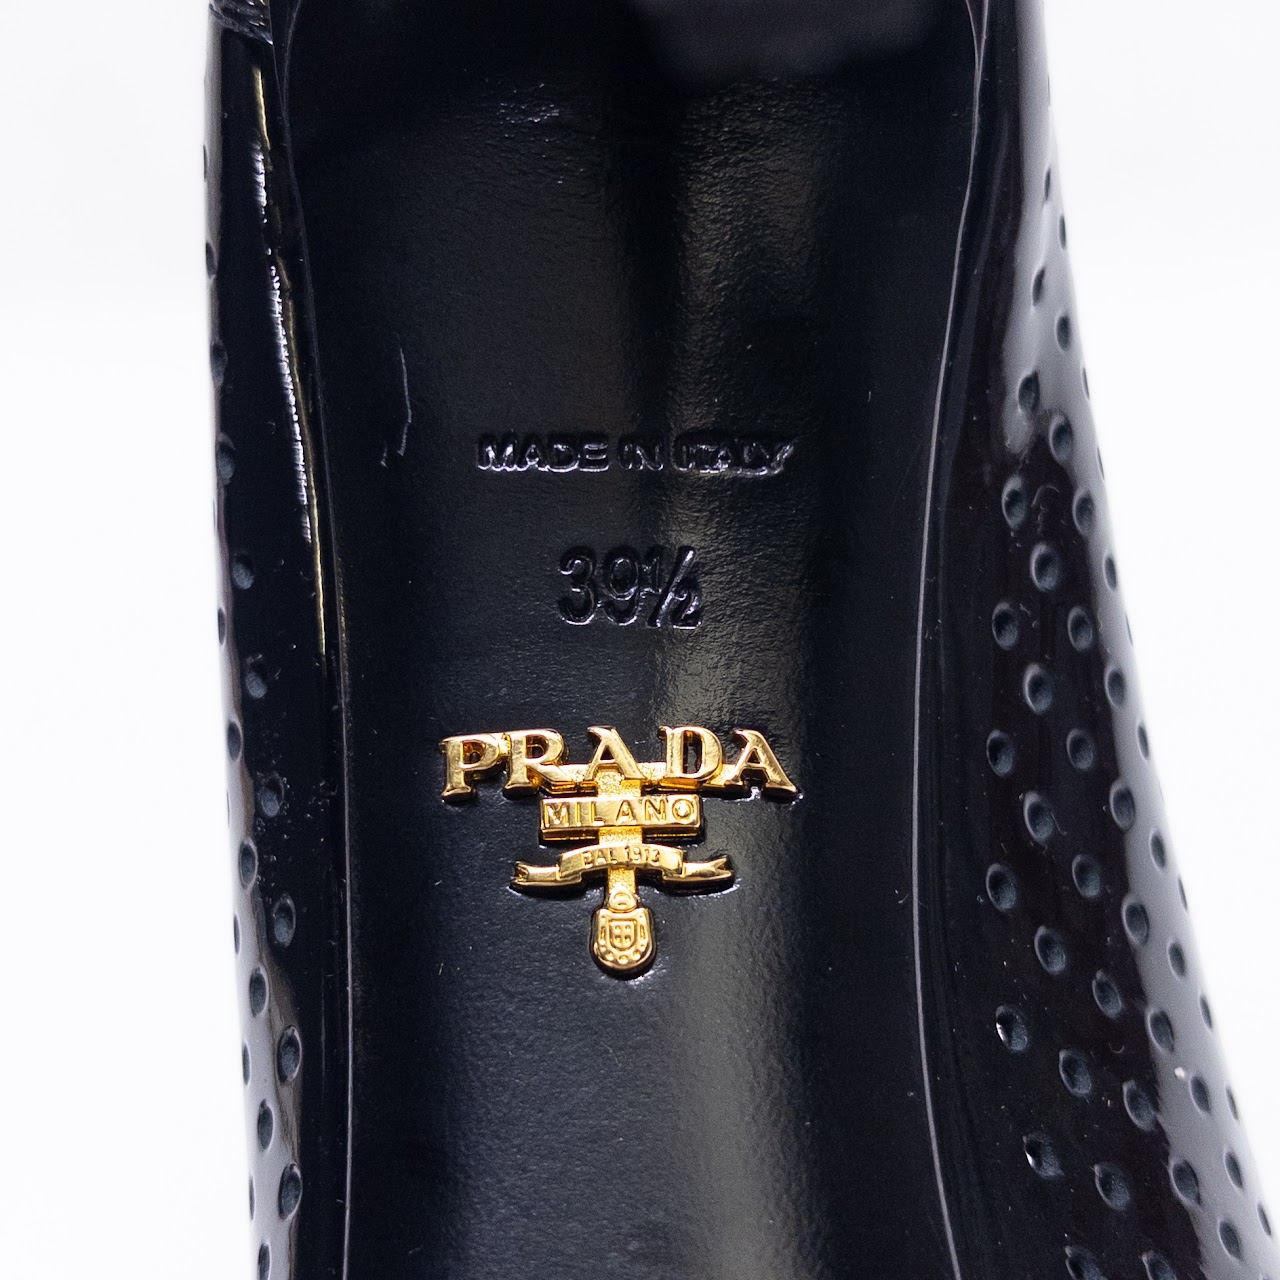 Prada Perforated Patent Leather Pumps